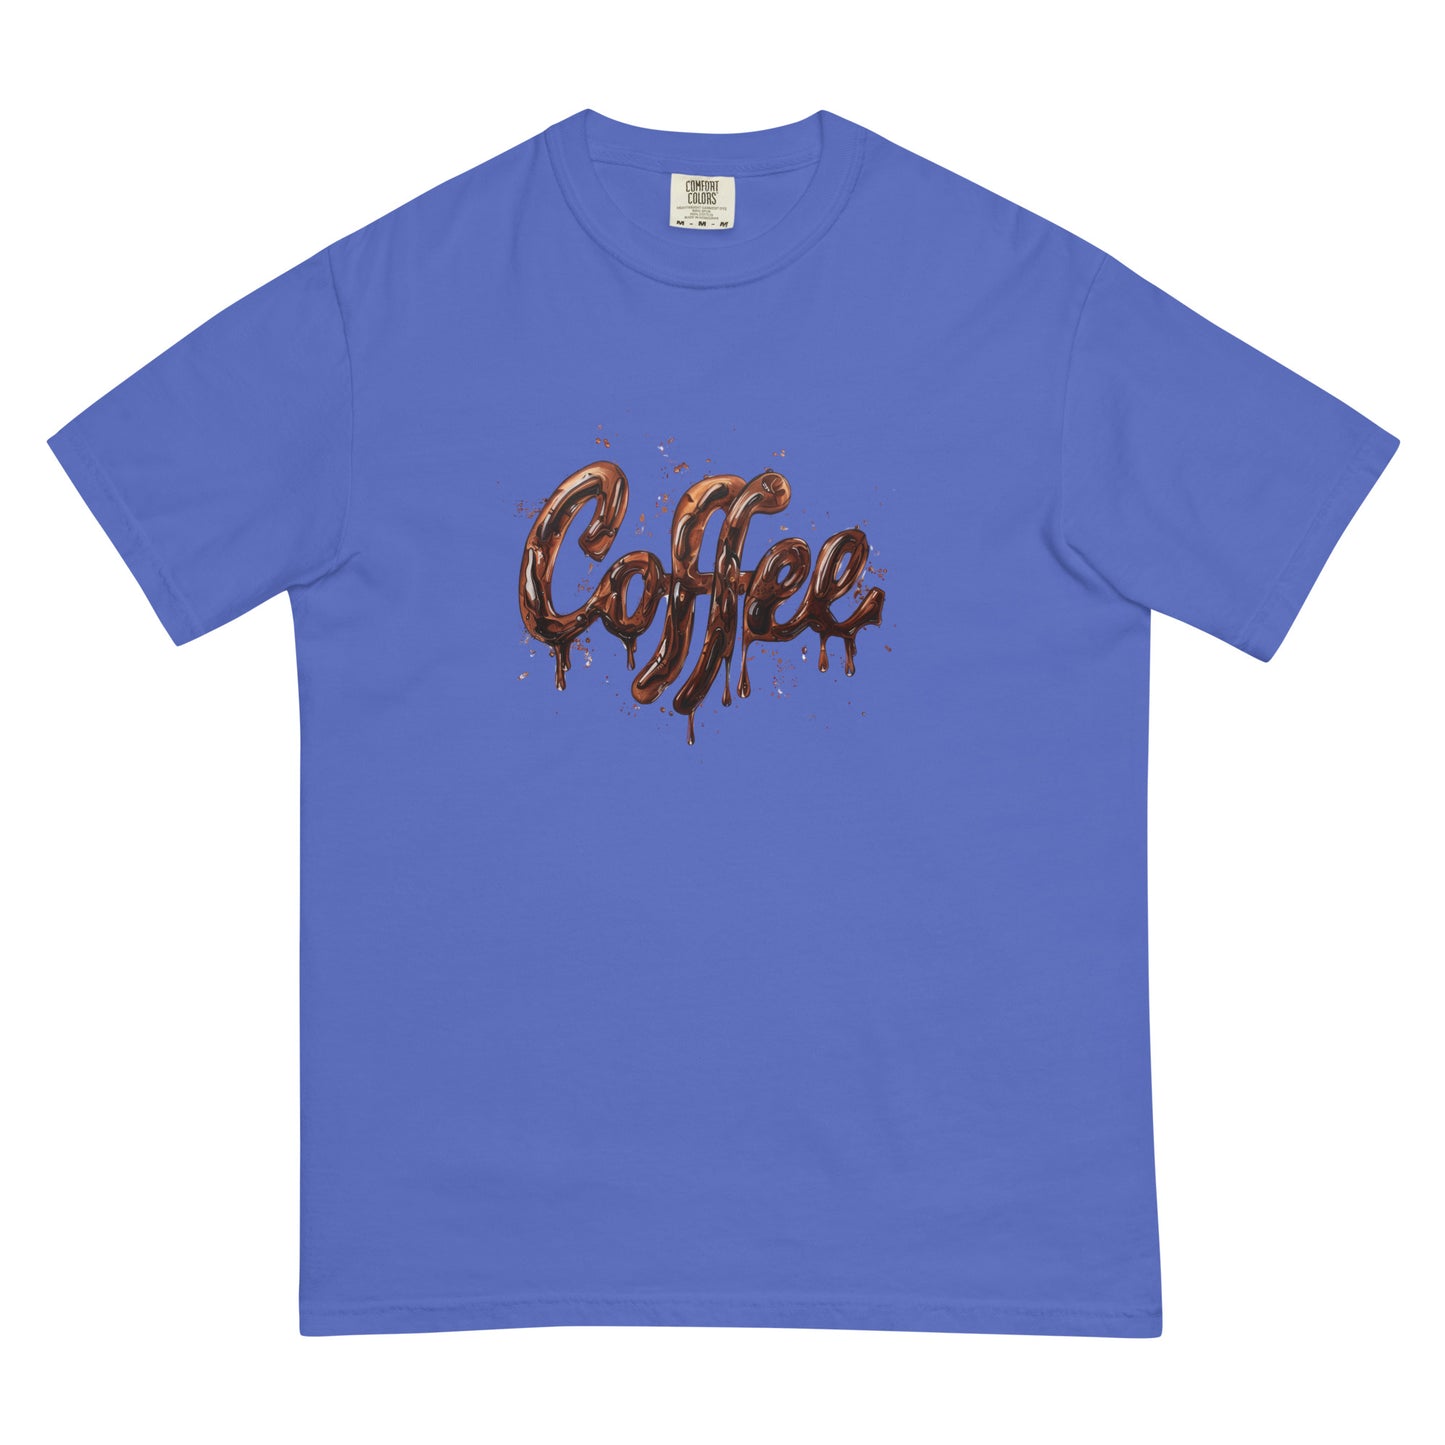 Coffee in Cursive t-shirt - Unisex